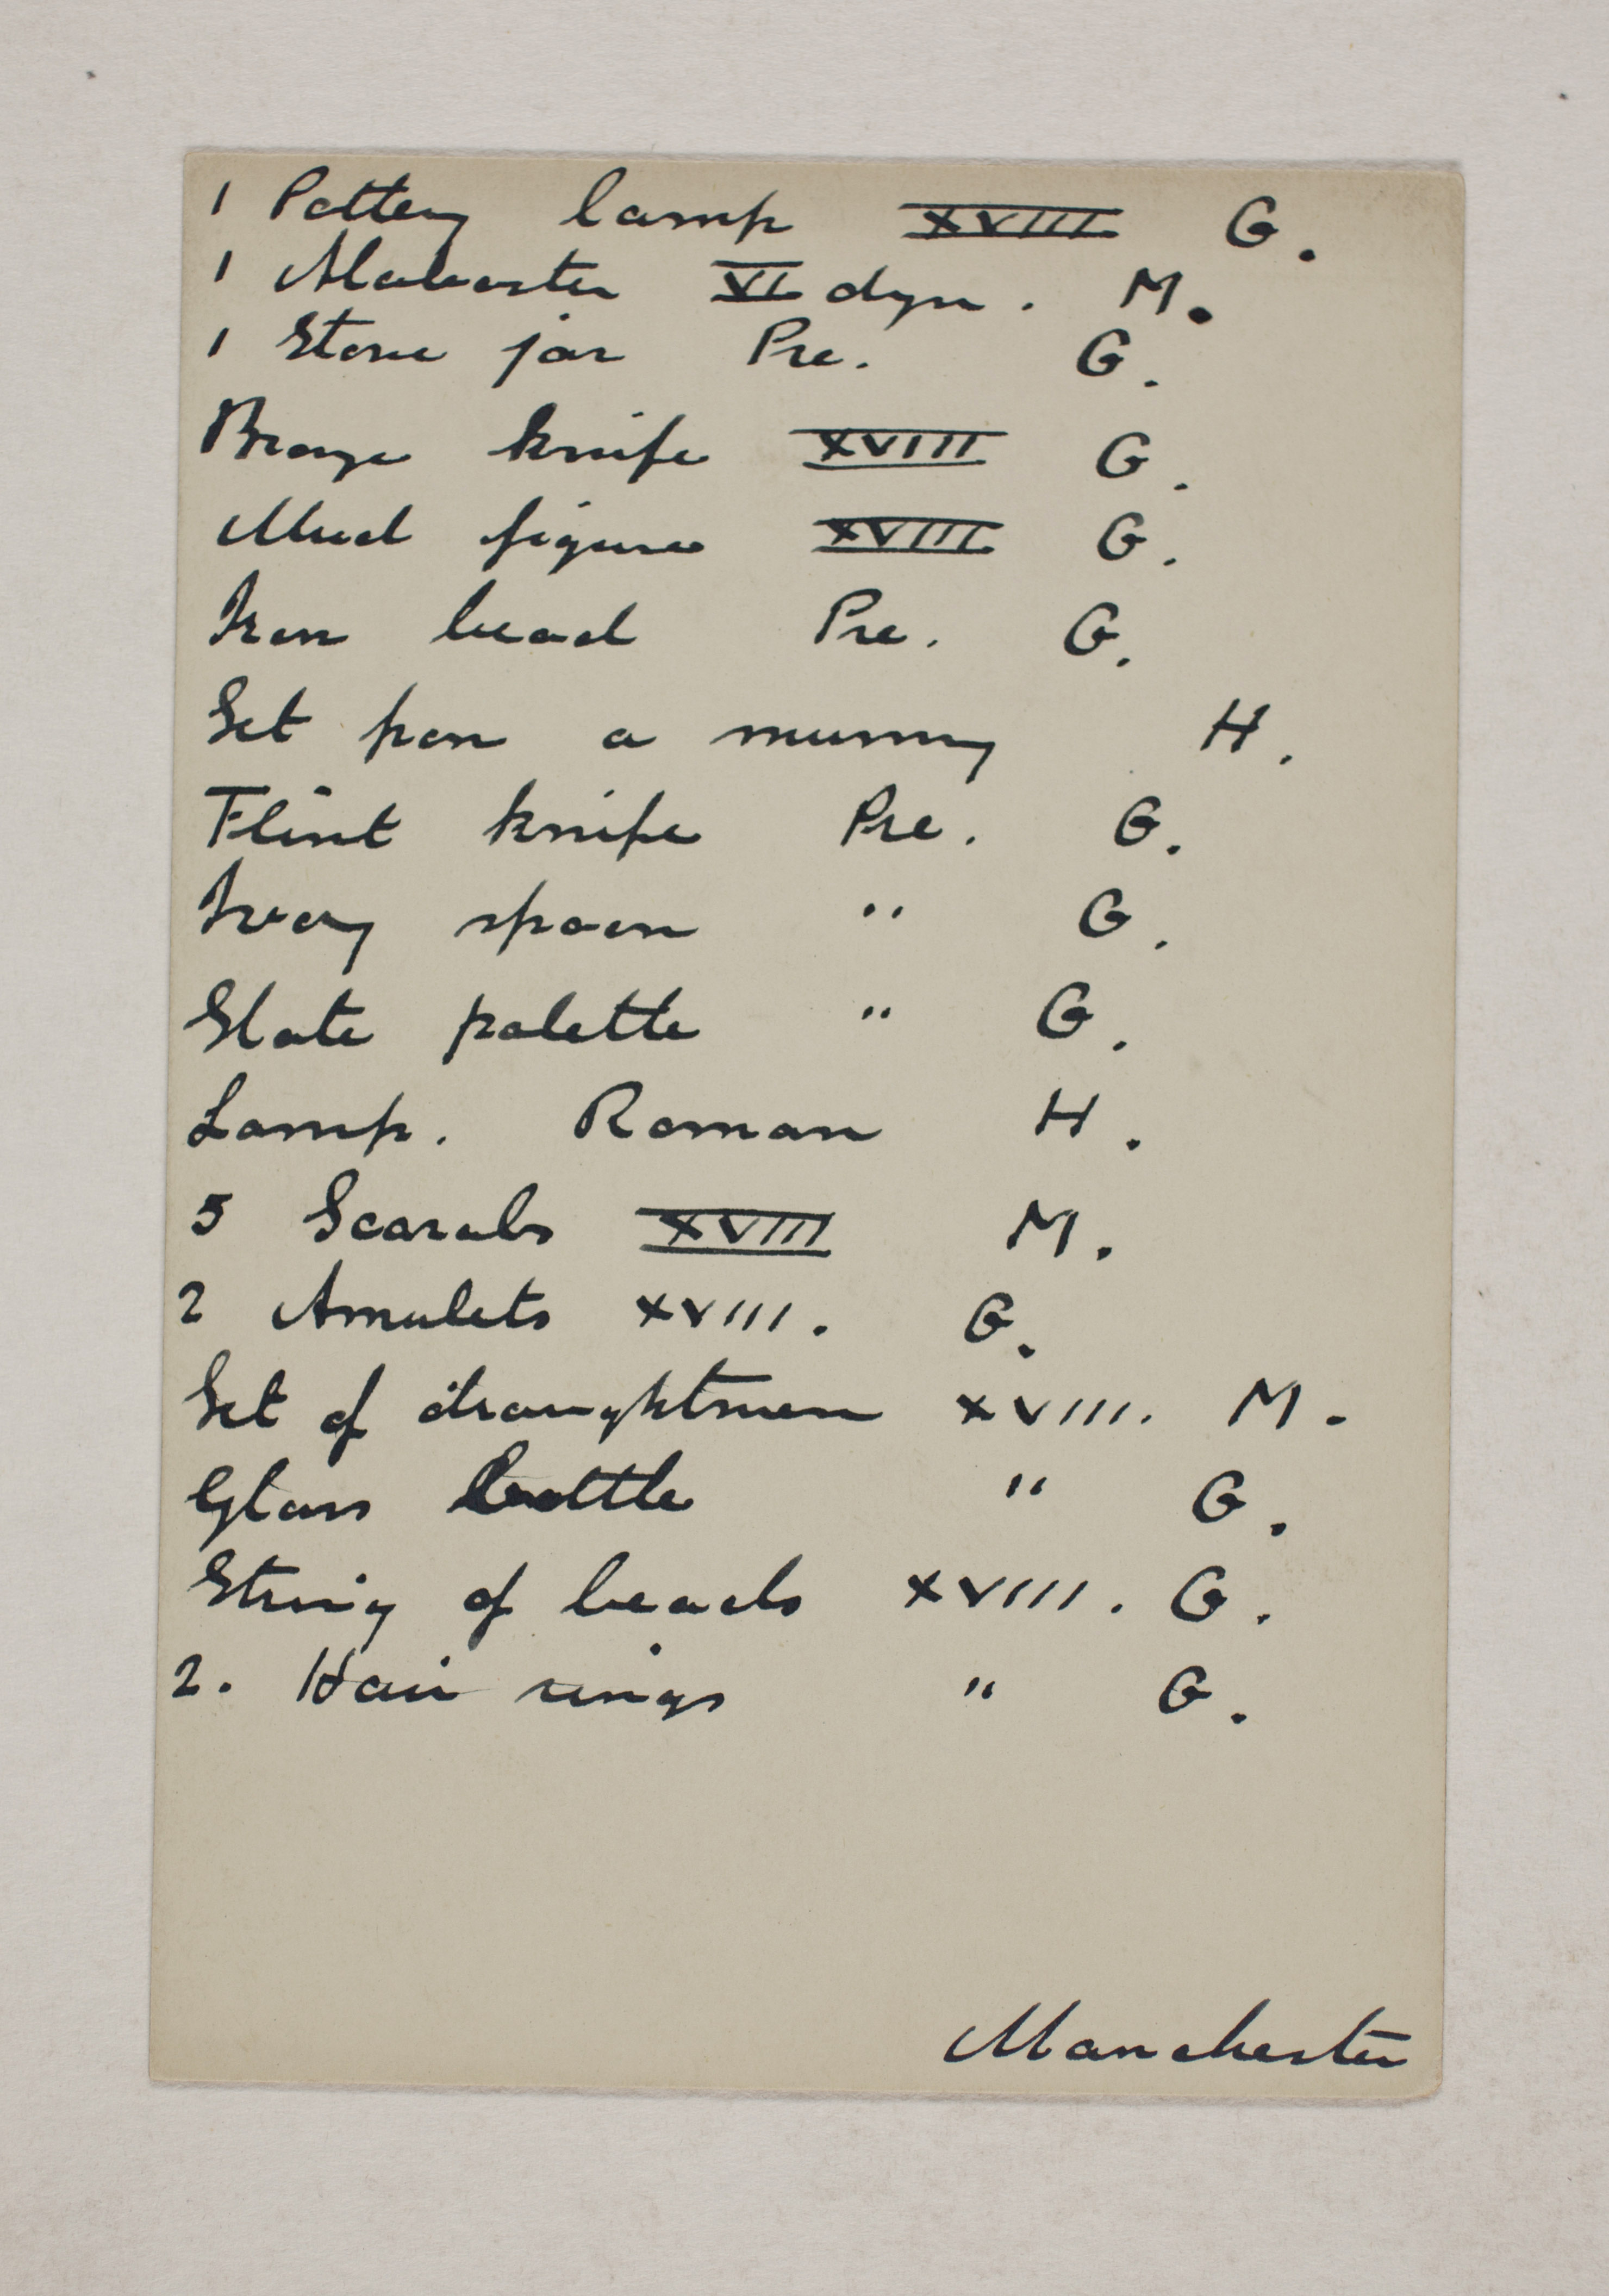 1910-11 Hawara, Gerzeh, Memphis, Mazghuneh Individual institution list  PMA/WFP1/D/19/25